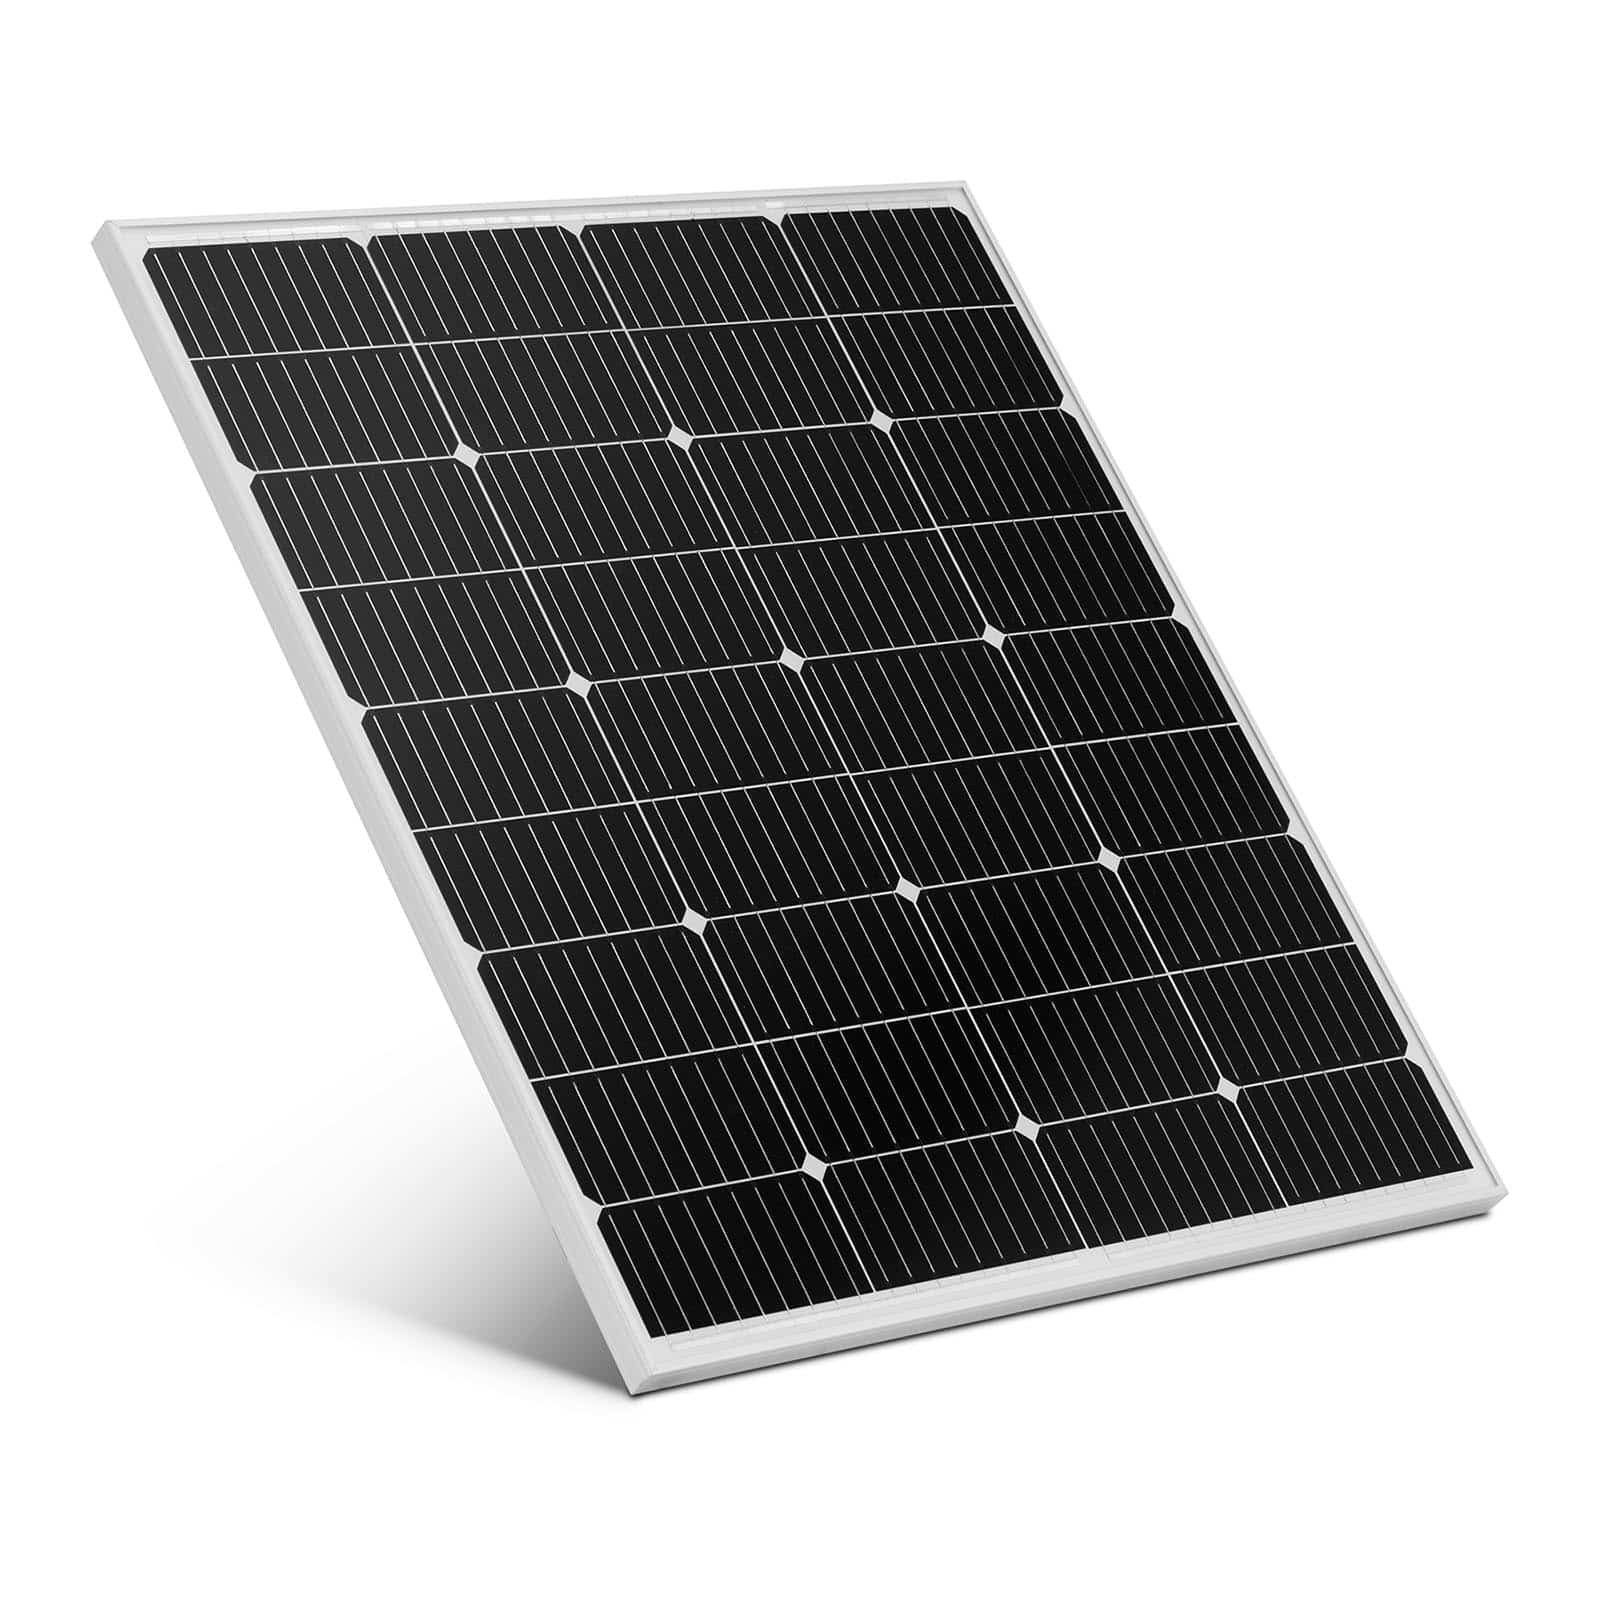 MSW Solarmodul Monkristallines Solarpanel 110W mit Bypass-Technologie